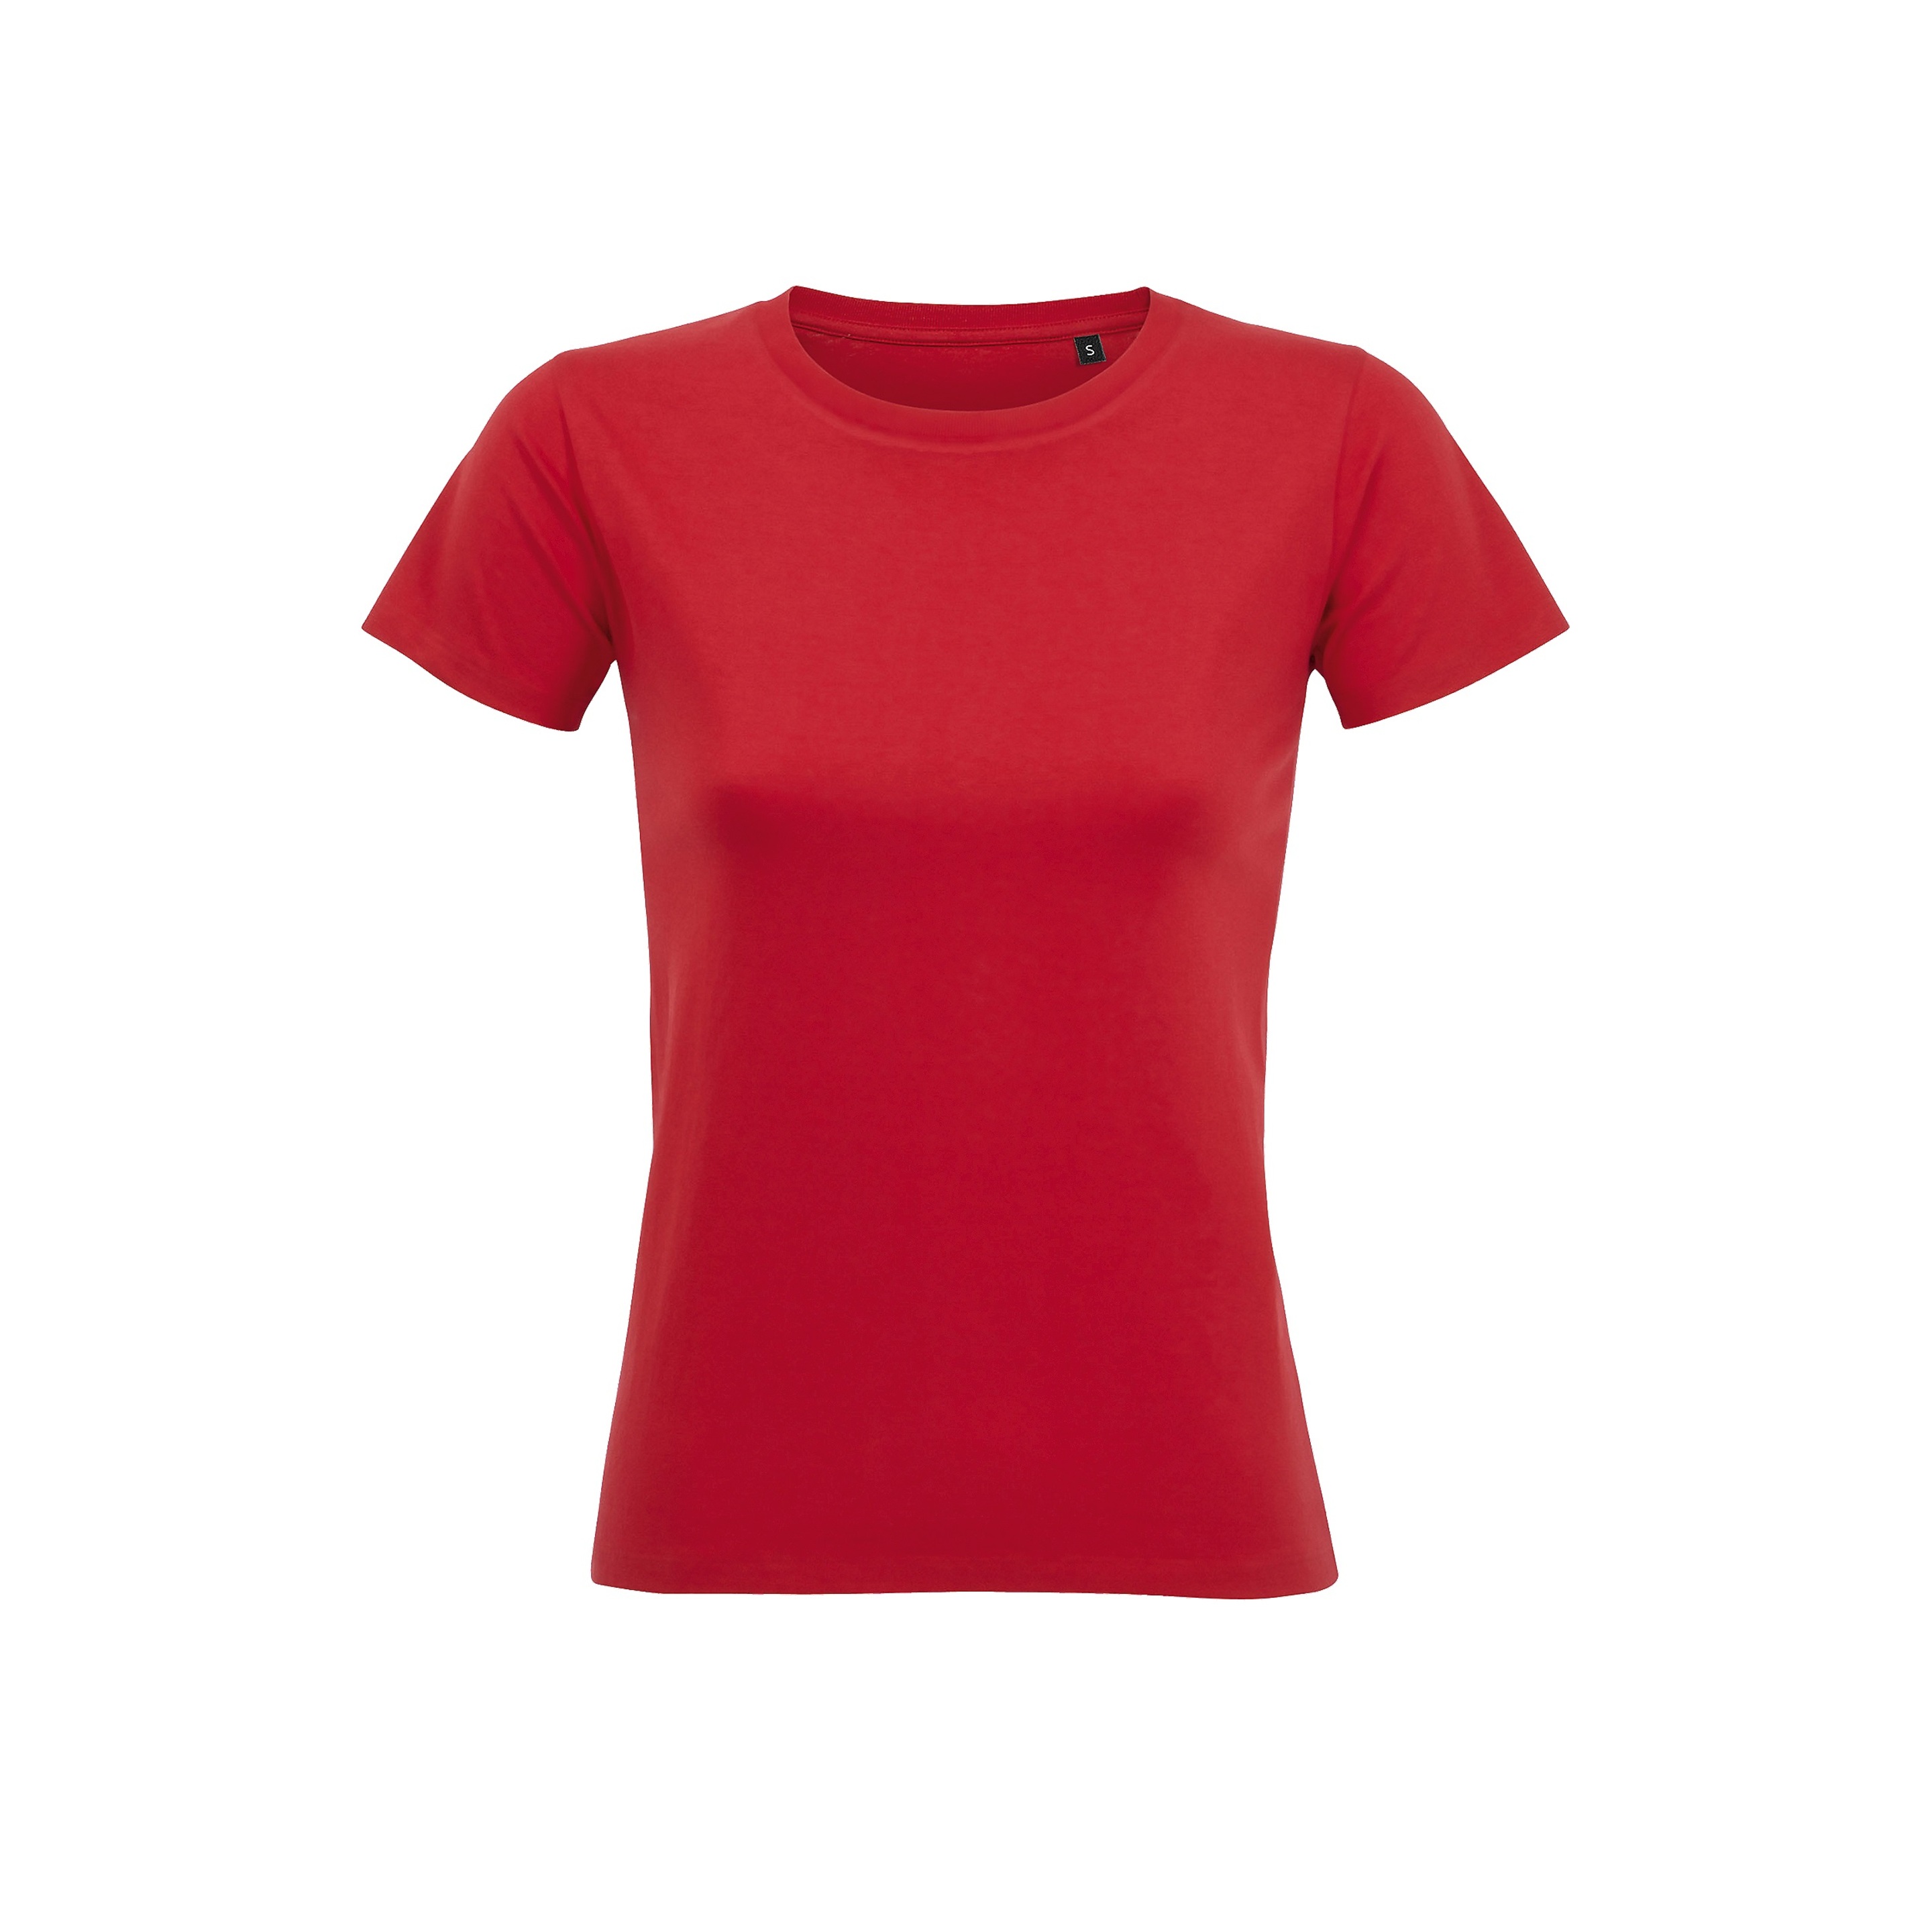 Camiseta Feminina Com Decote Redondo Em Imoeriail